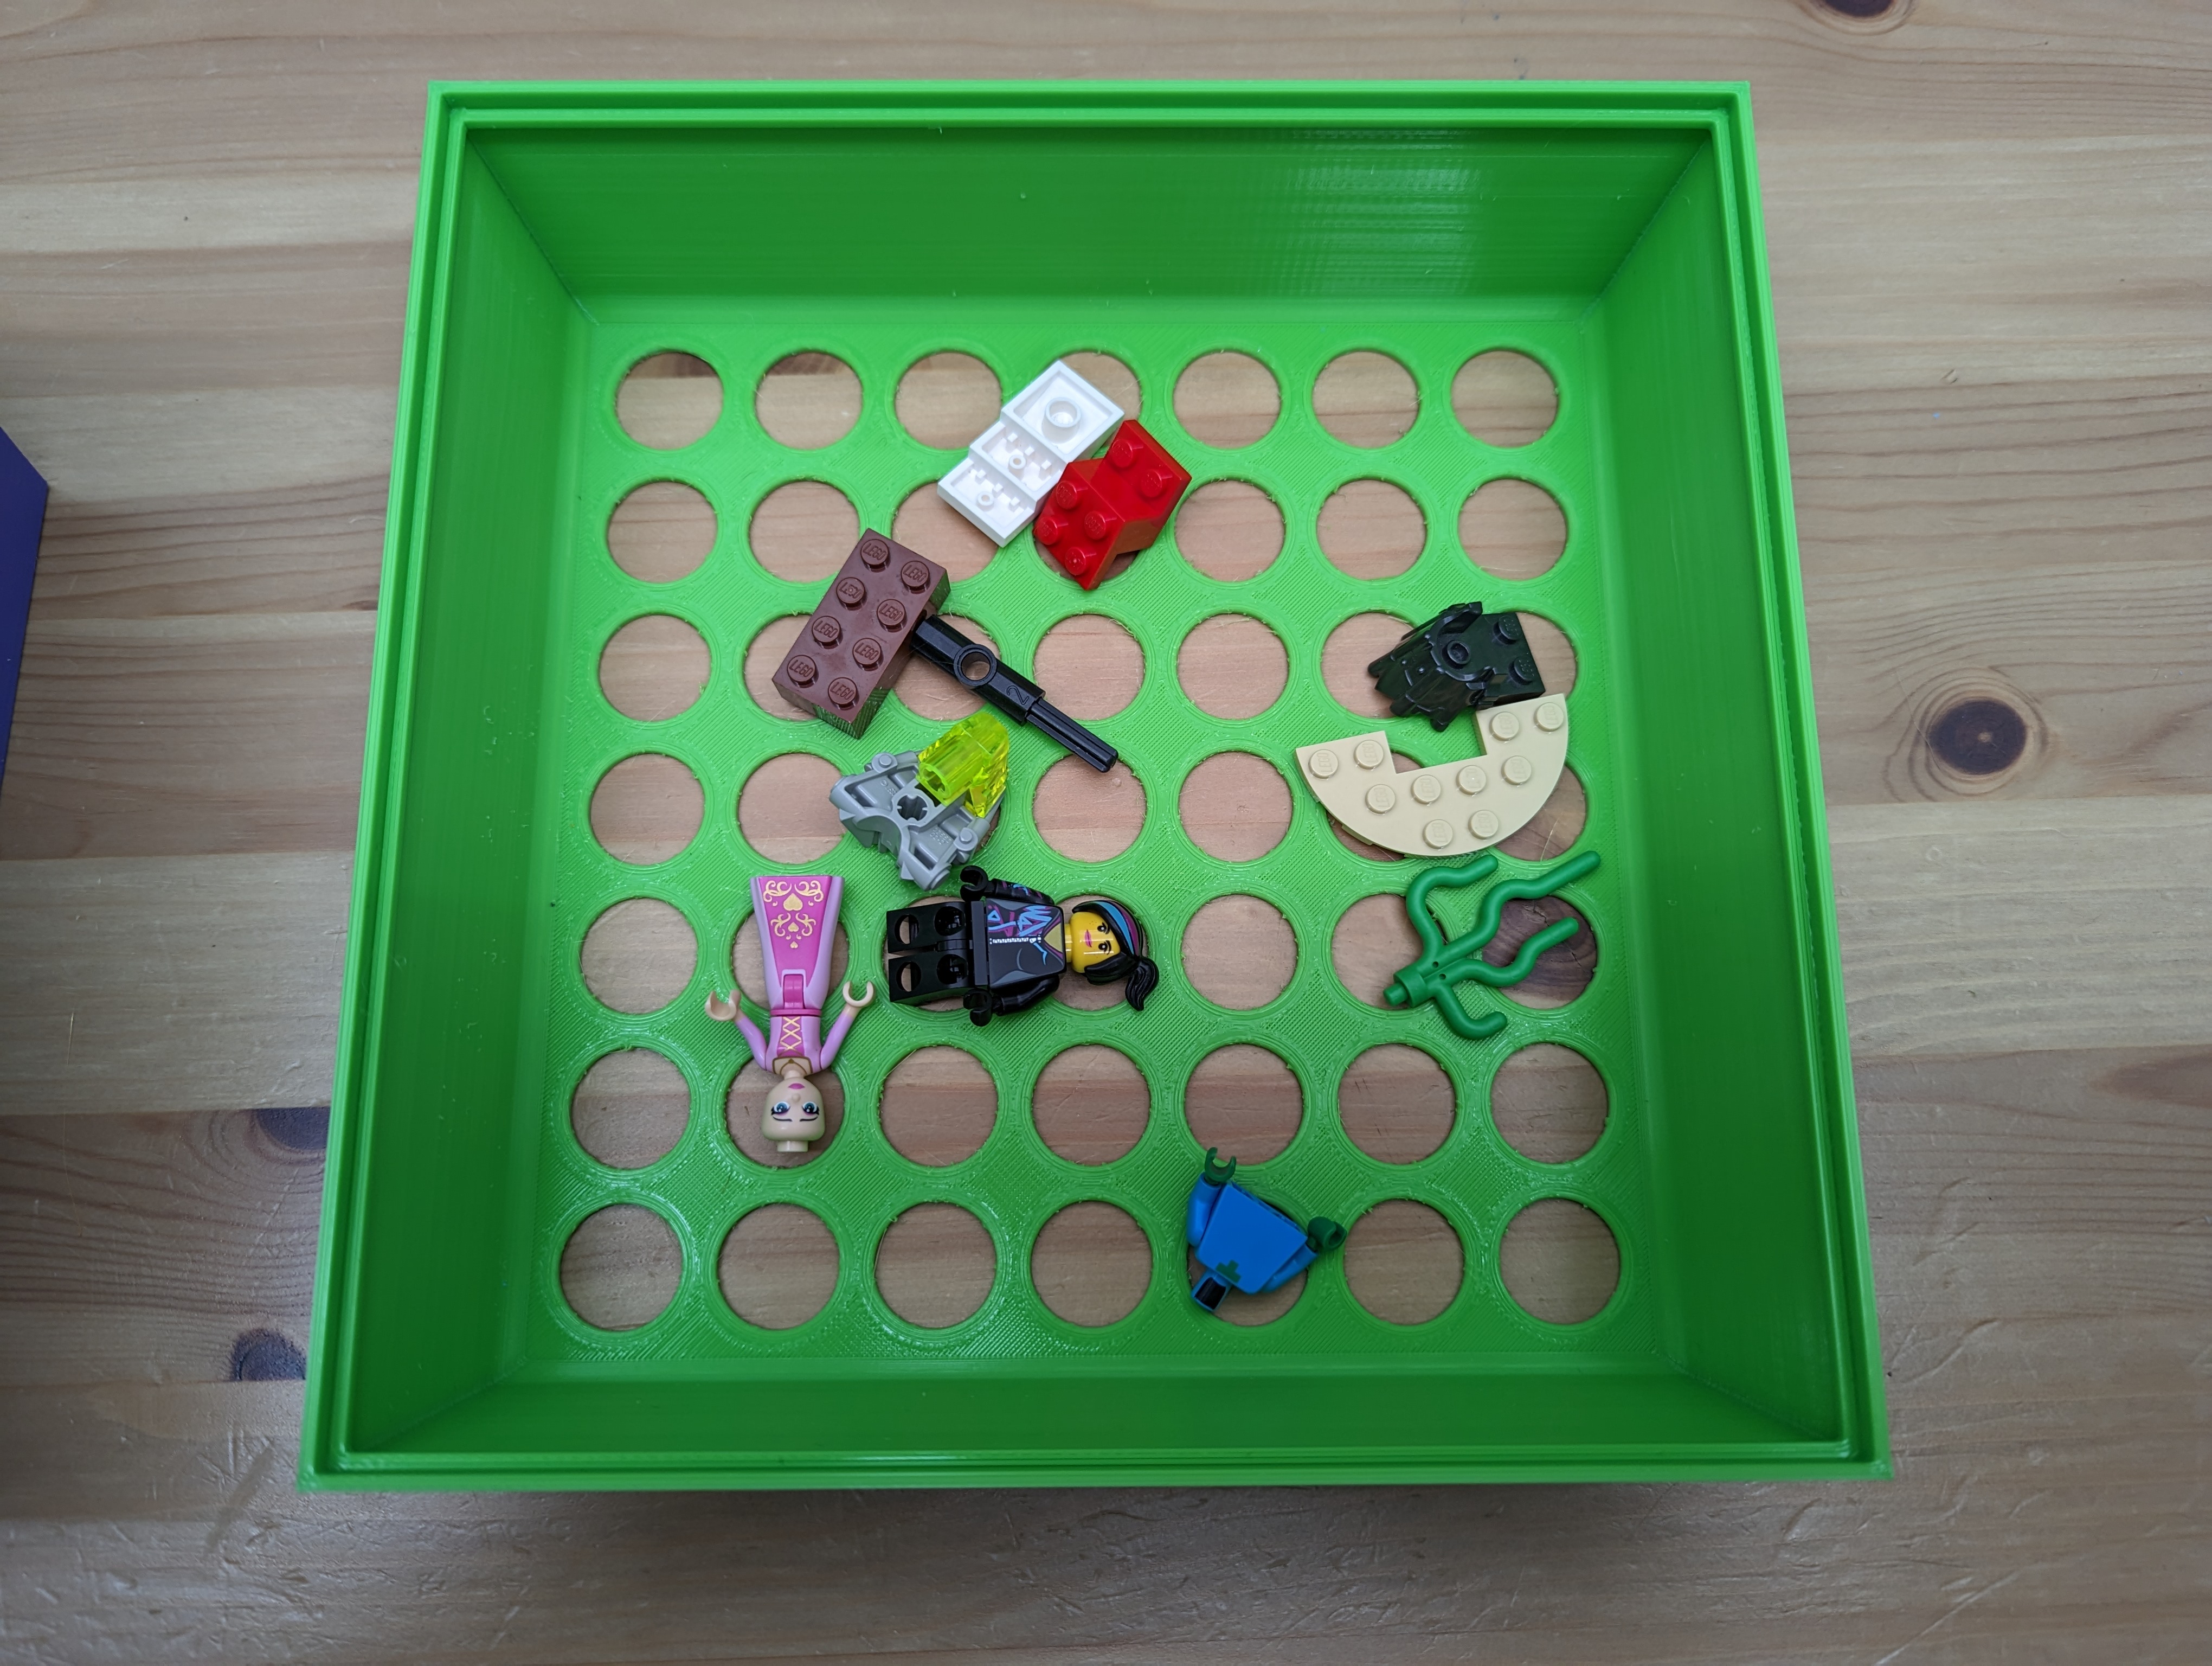 Lego Sorting Trays by mopar2511 - MakerWorld